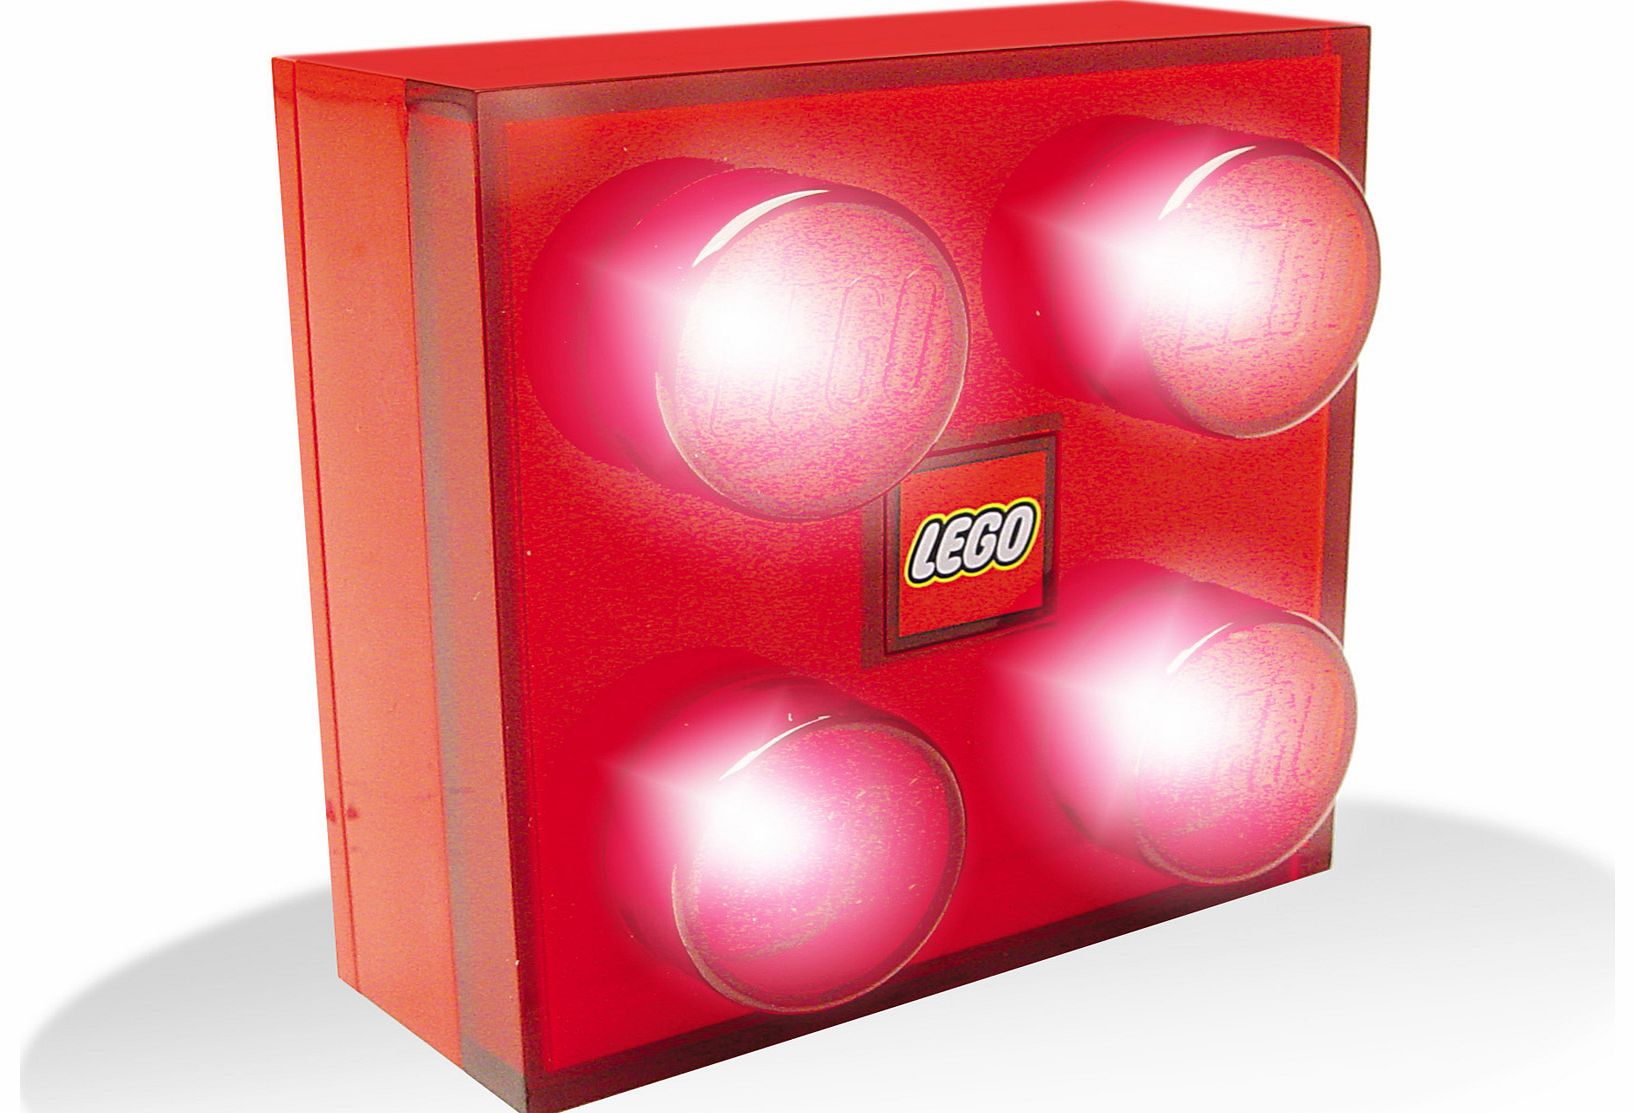 re:creation Lego Brick Light - Red